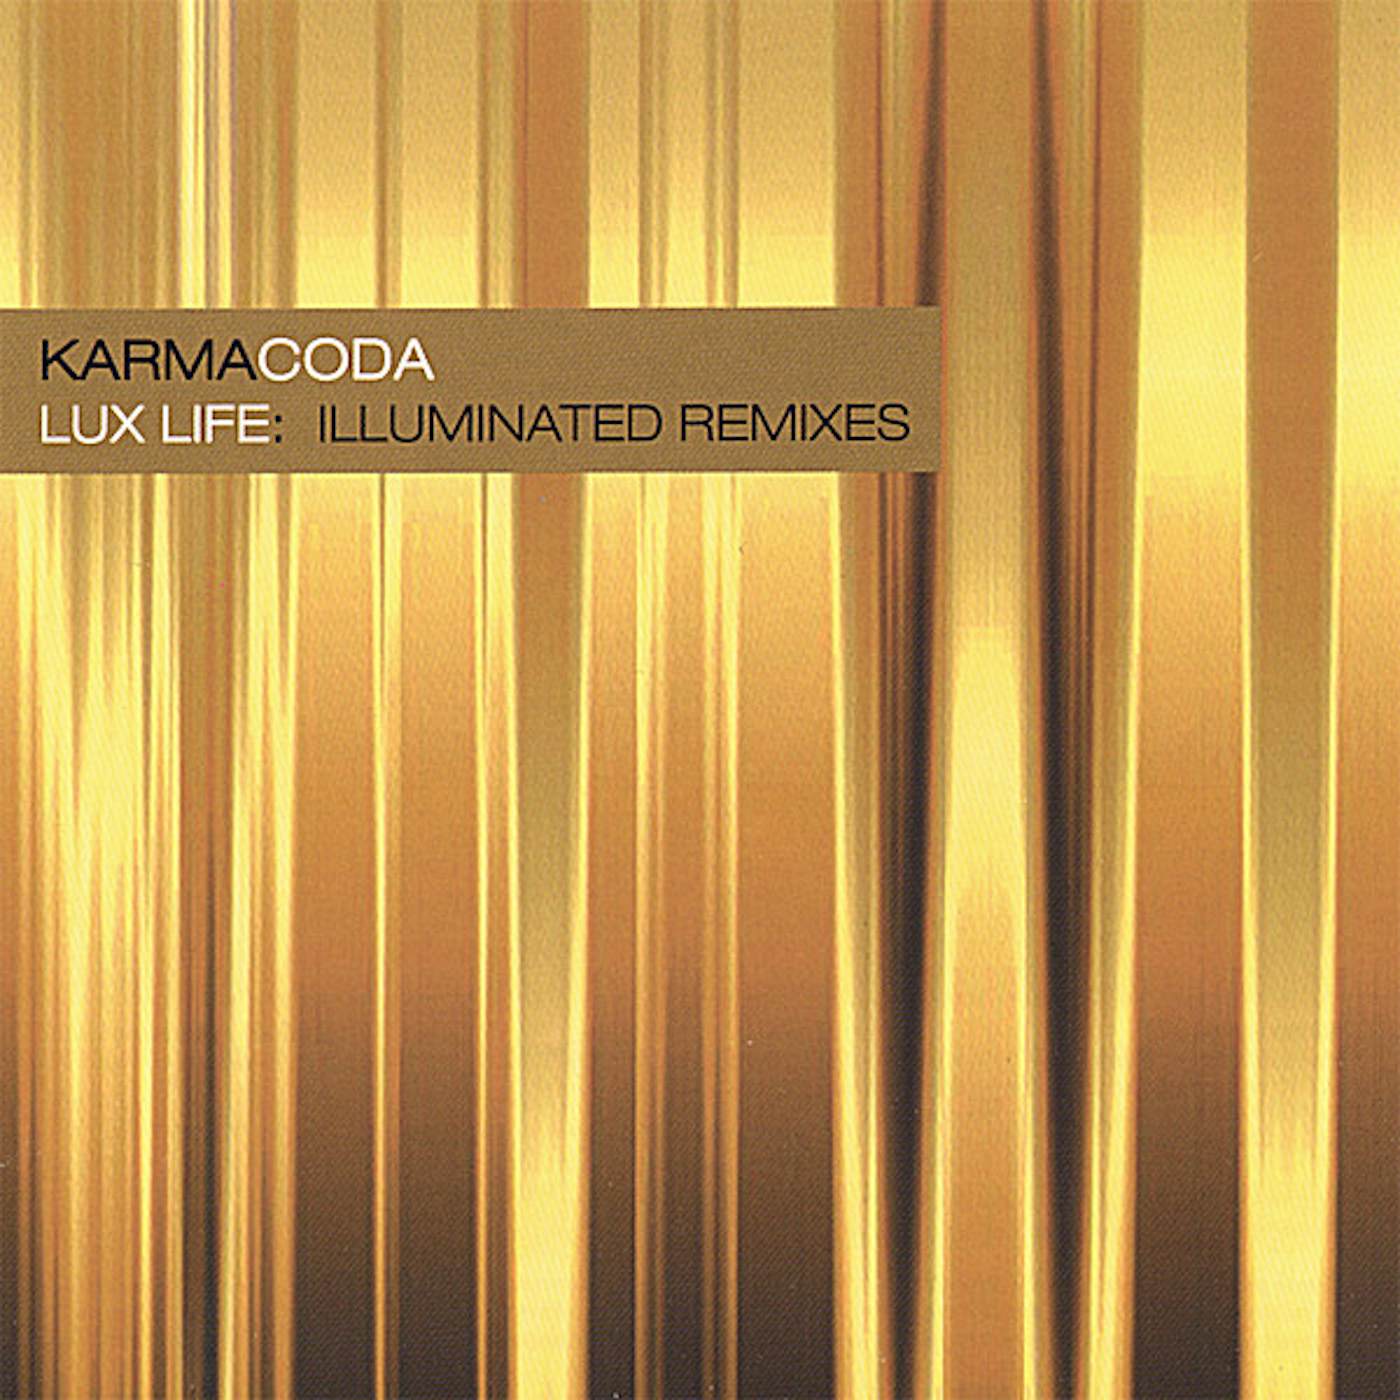 Karmacoda LUX LIFE: ILLUMINATED REMIXES CD